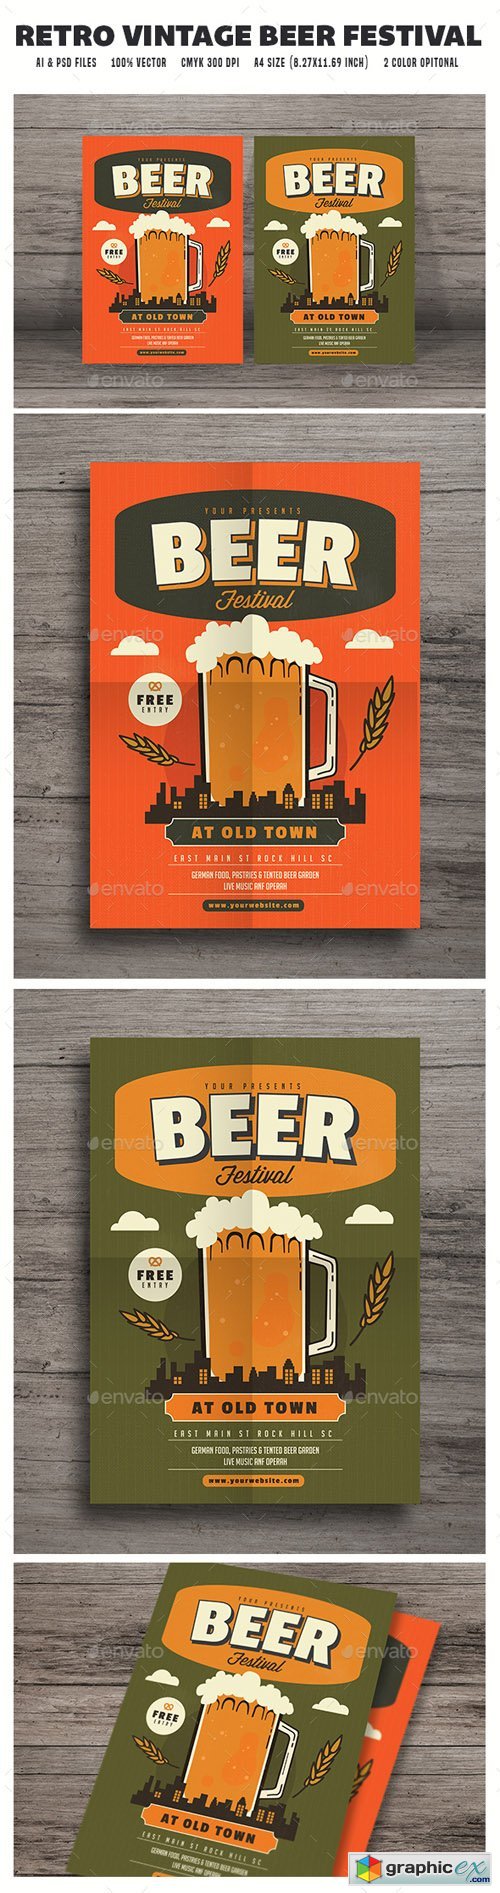 Retro VIntage Beer Festival Flyer